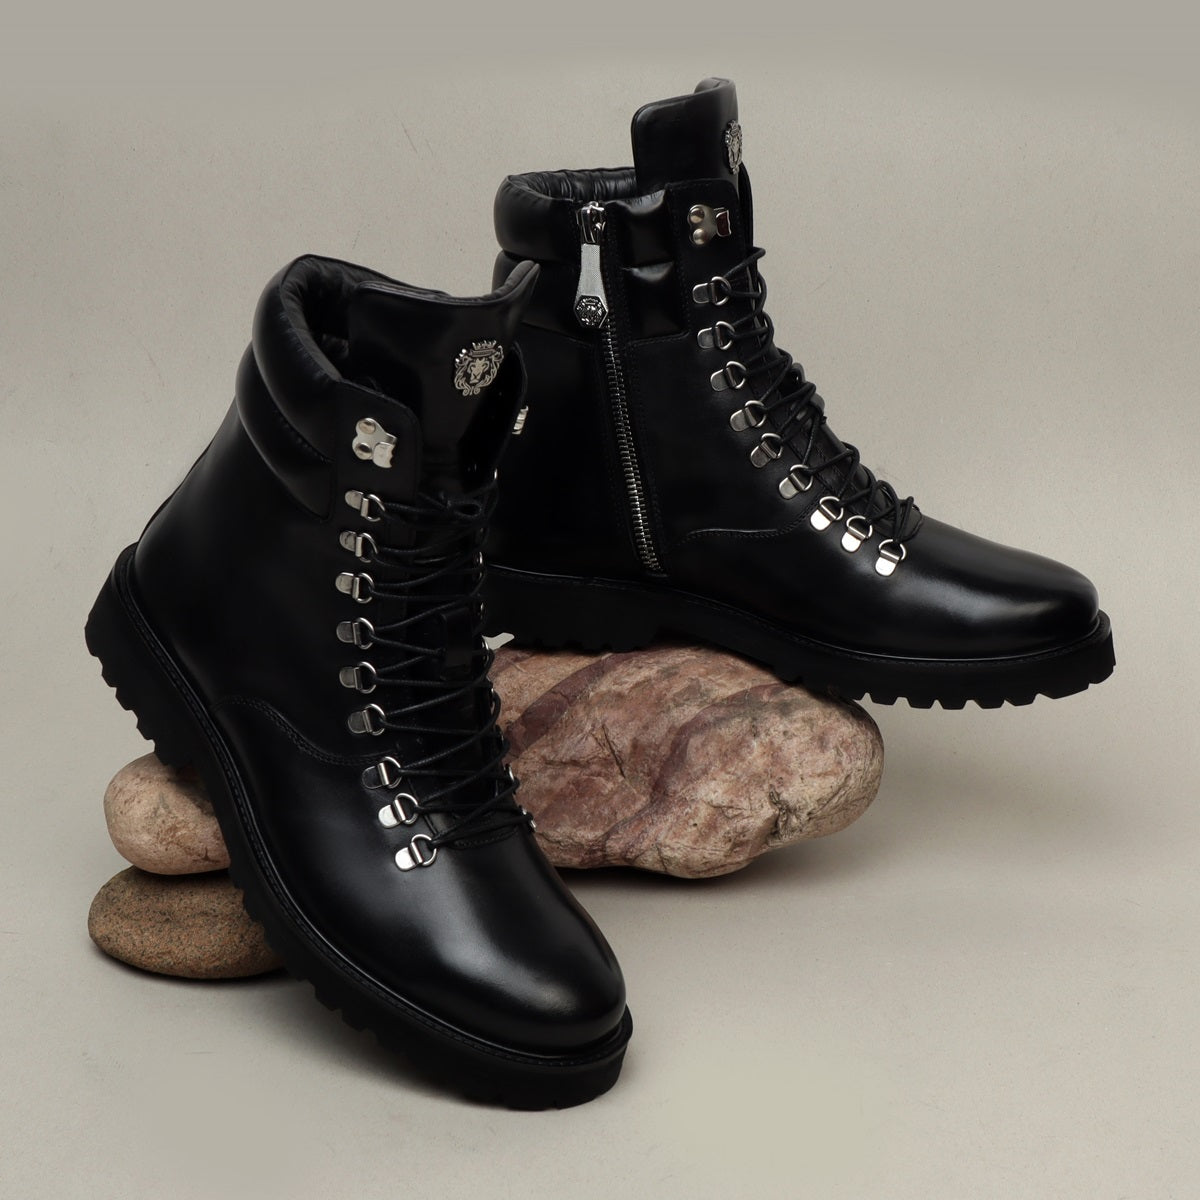 Customized Height Bespoke Black Leather Light Weight Biker Boots For Men By Brune & Bareskin